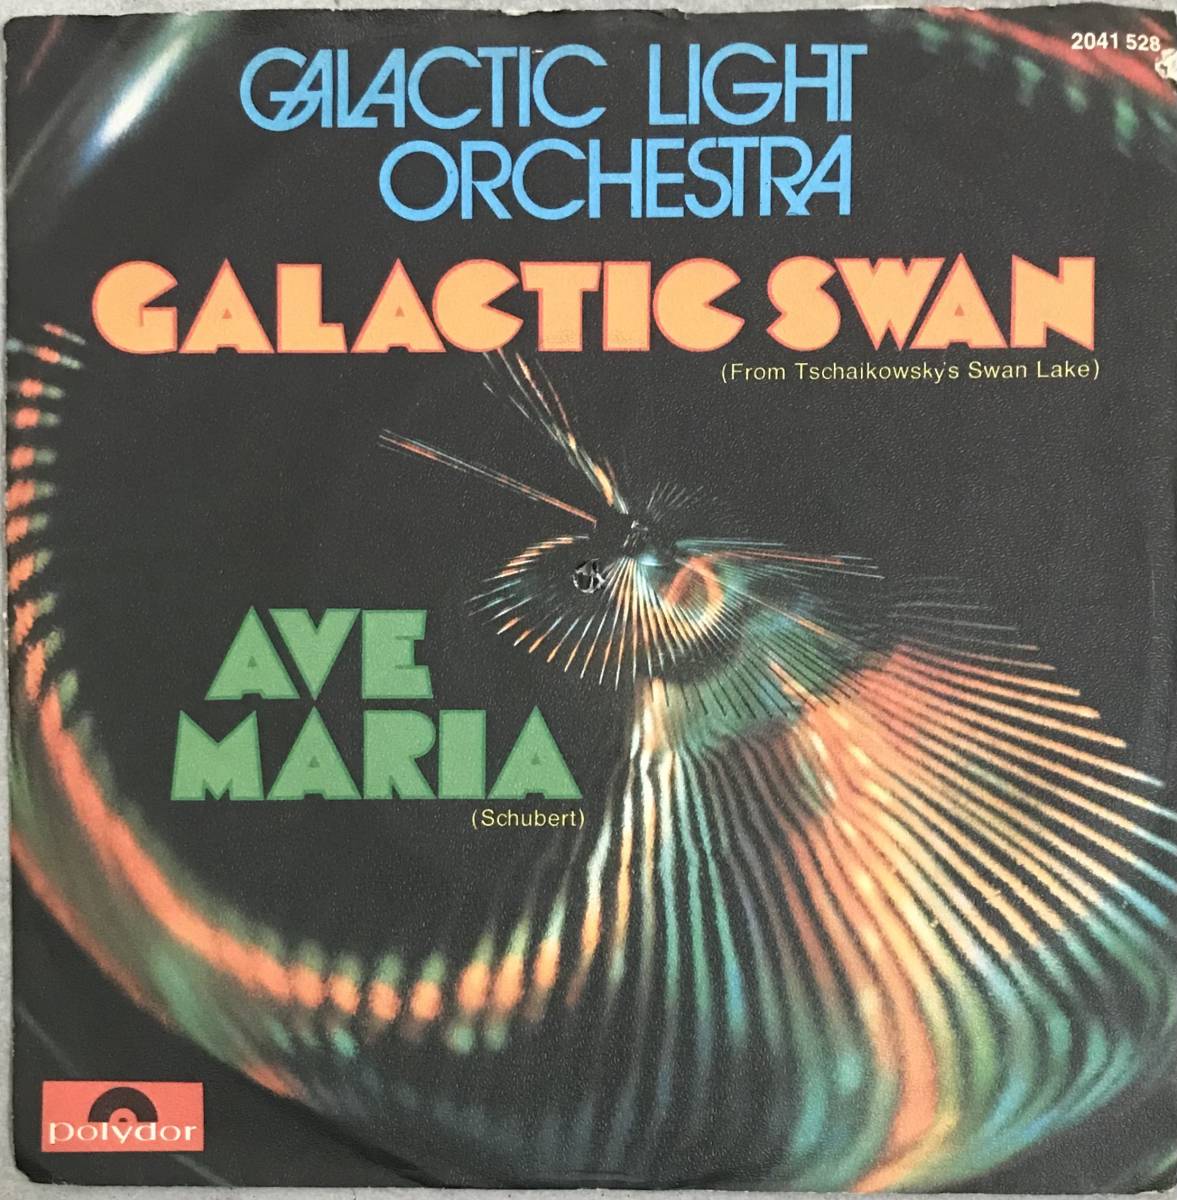 The Galactic Light Orchestra - Galactic Swan / Ave Maria / チャイコフスキー 白鳥の湖 アベマリア 藤原ヒロシの画像1